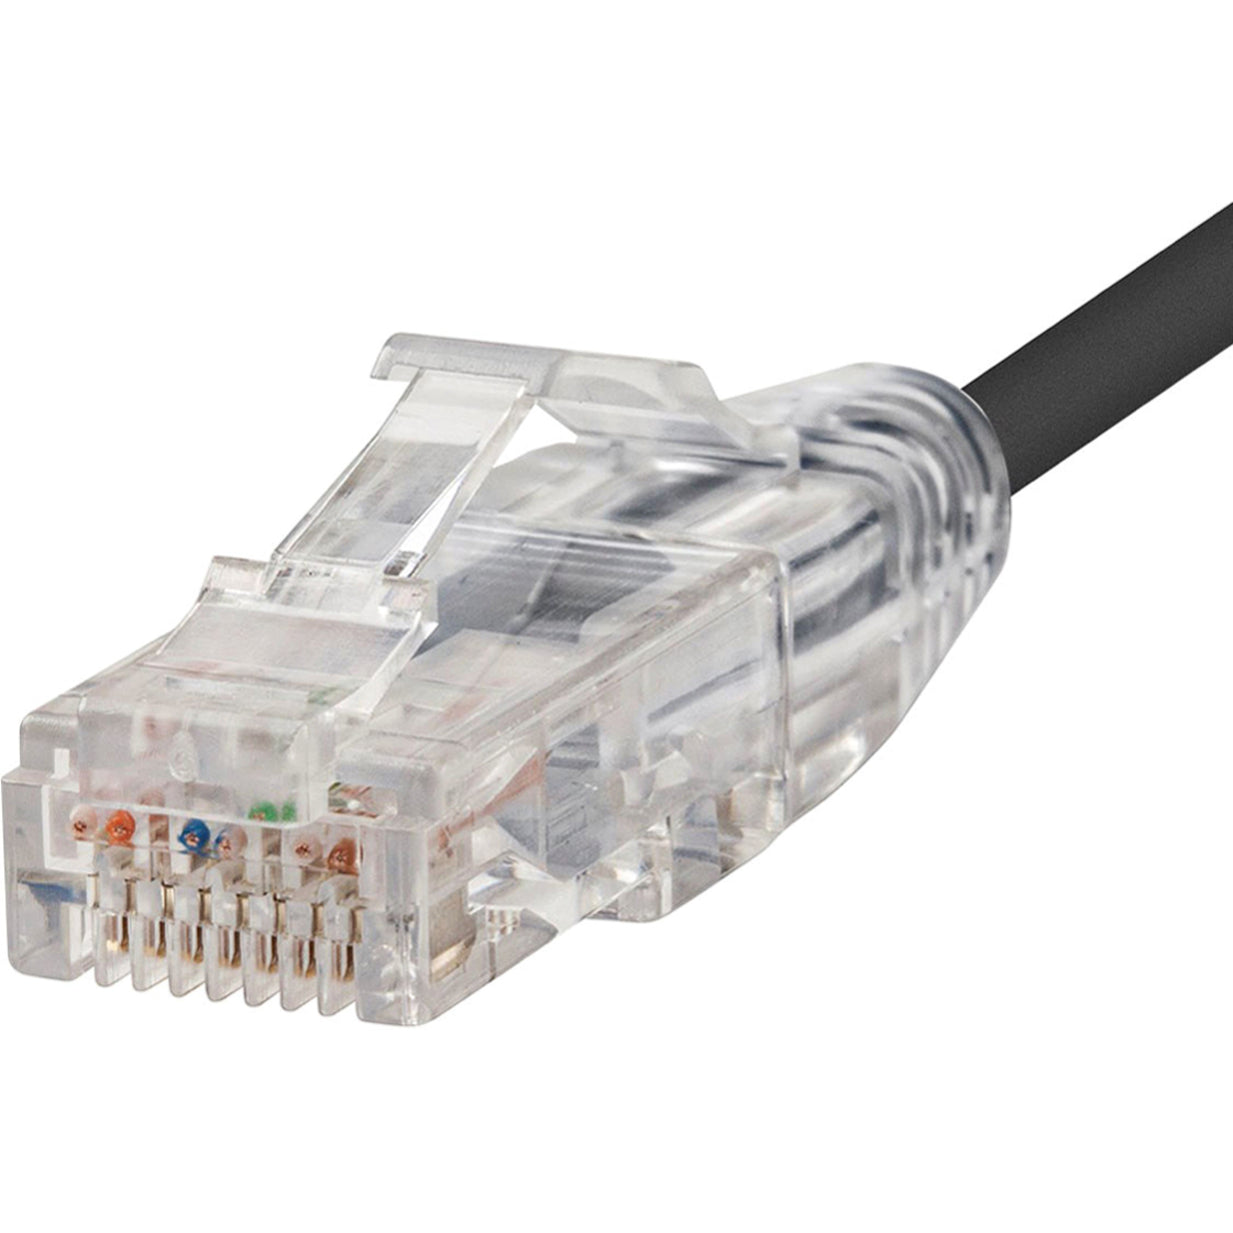 Monoprice 13527 SlimRun Cat6 28AWG UTP Ethernet Network Cable, 3ft Black, Flexible, Snagless